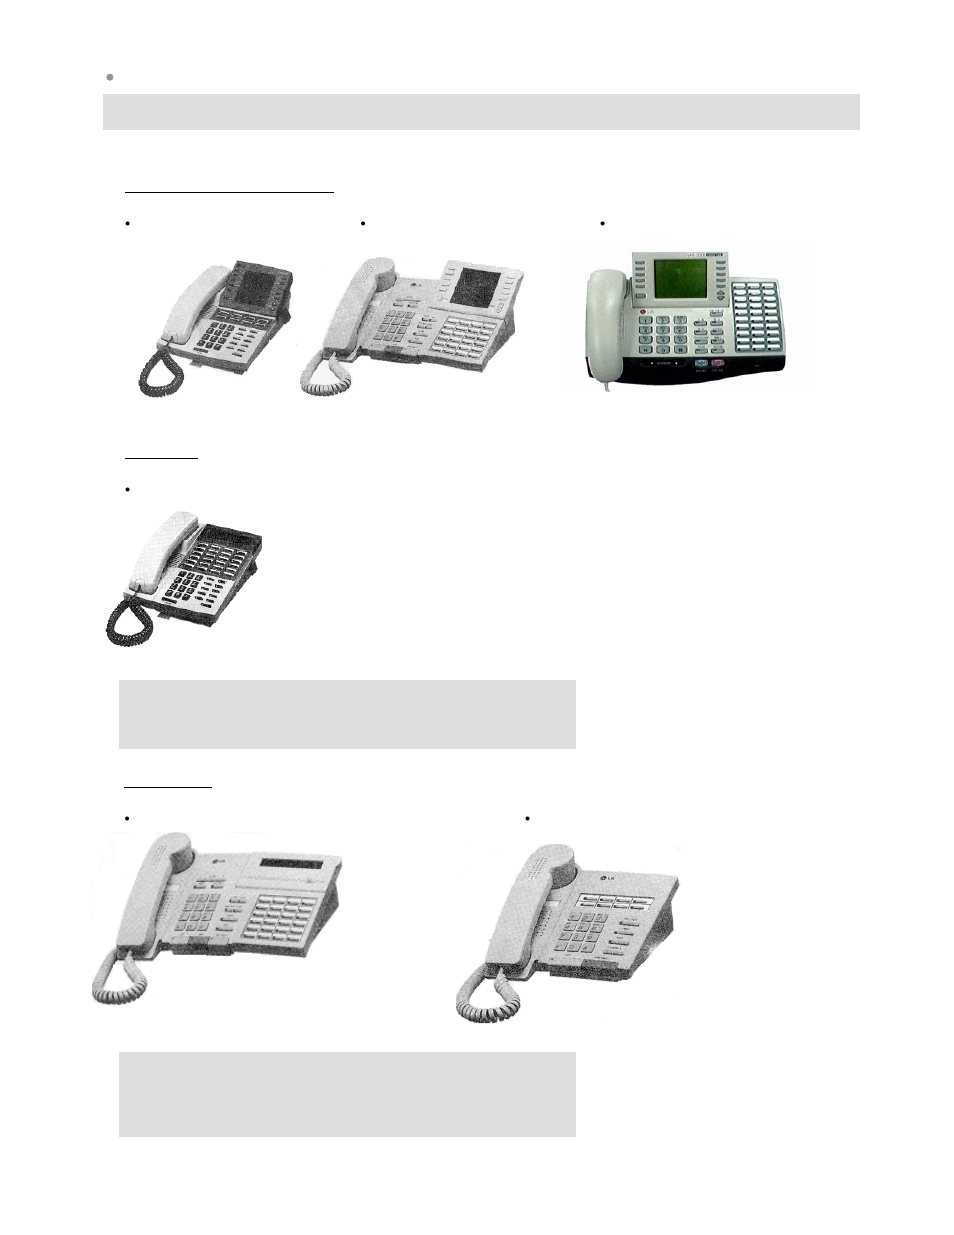 Aria, Digital key telephone family | LG Aria 186 User Manual | Page 8 / 37